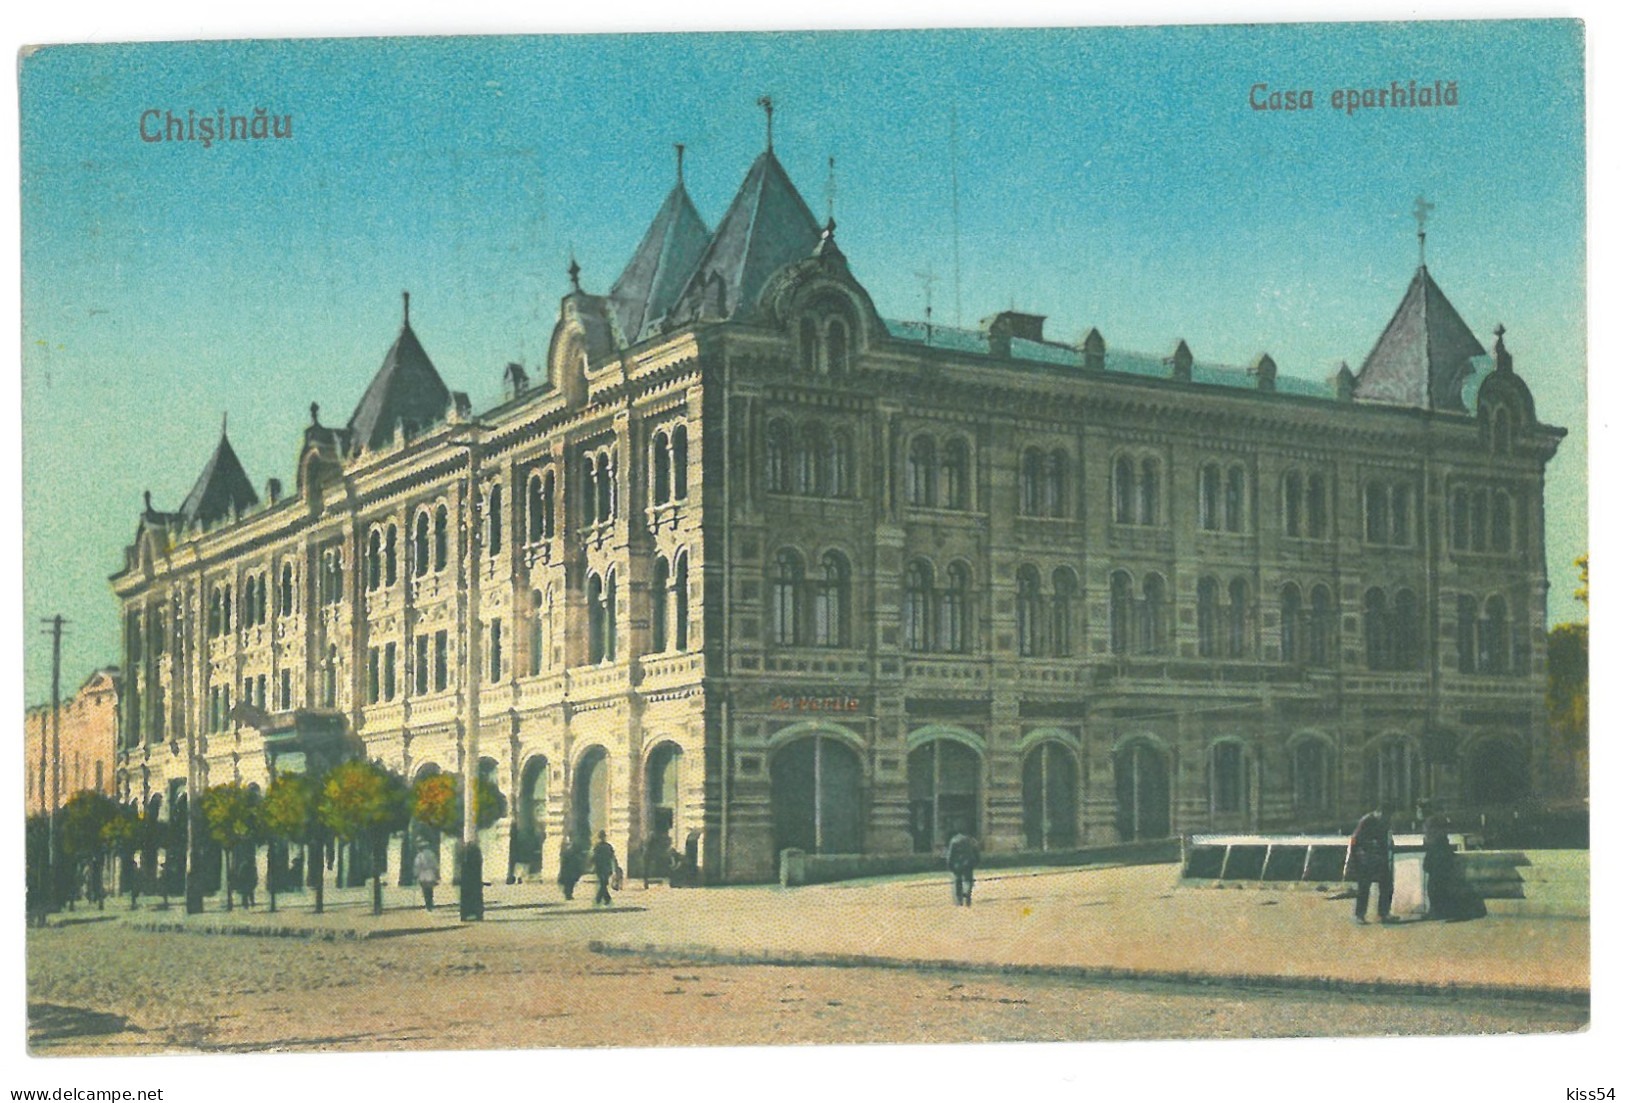 MOL 1 - 16270 CHISINAU, Casa Eparhiala, Moldova - Old Postcard - Used - 1925 - Moldawien (Moldova)